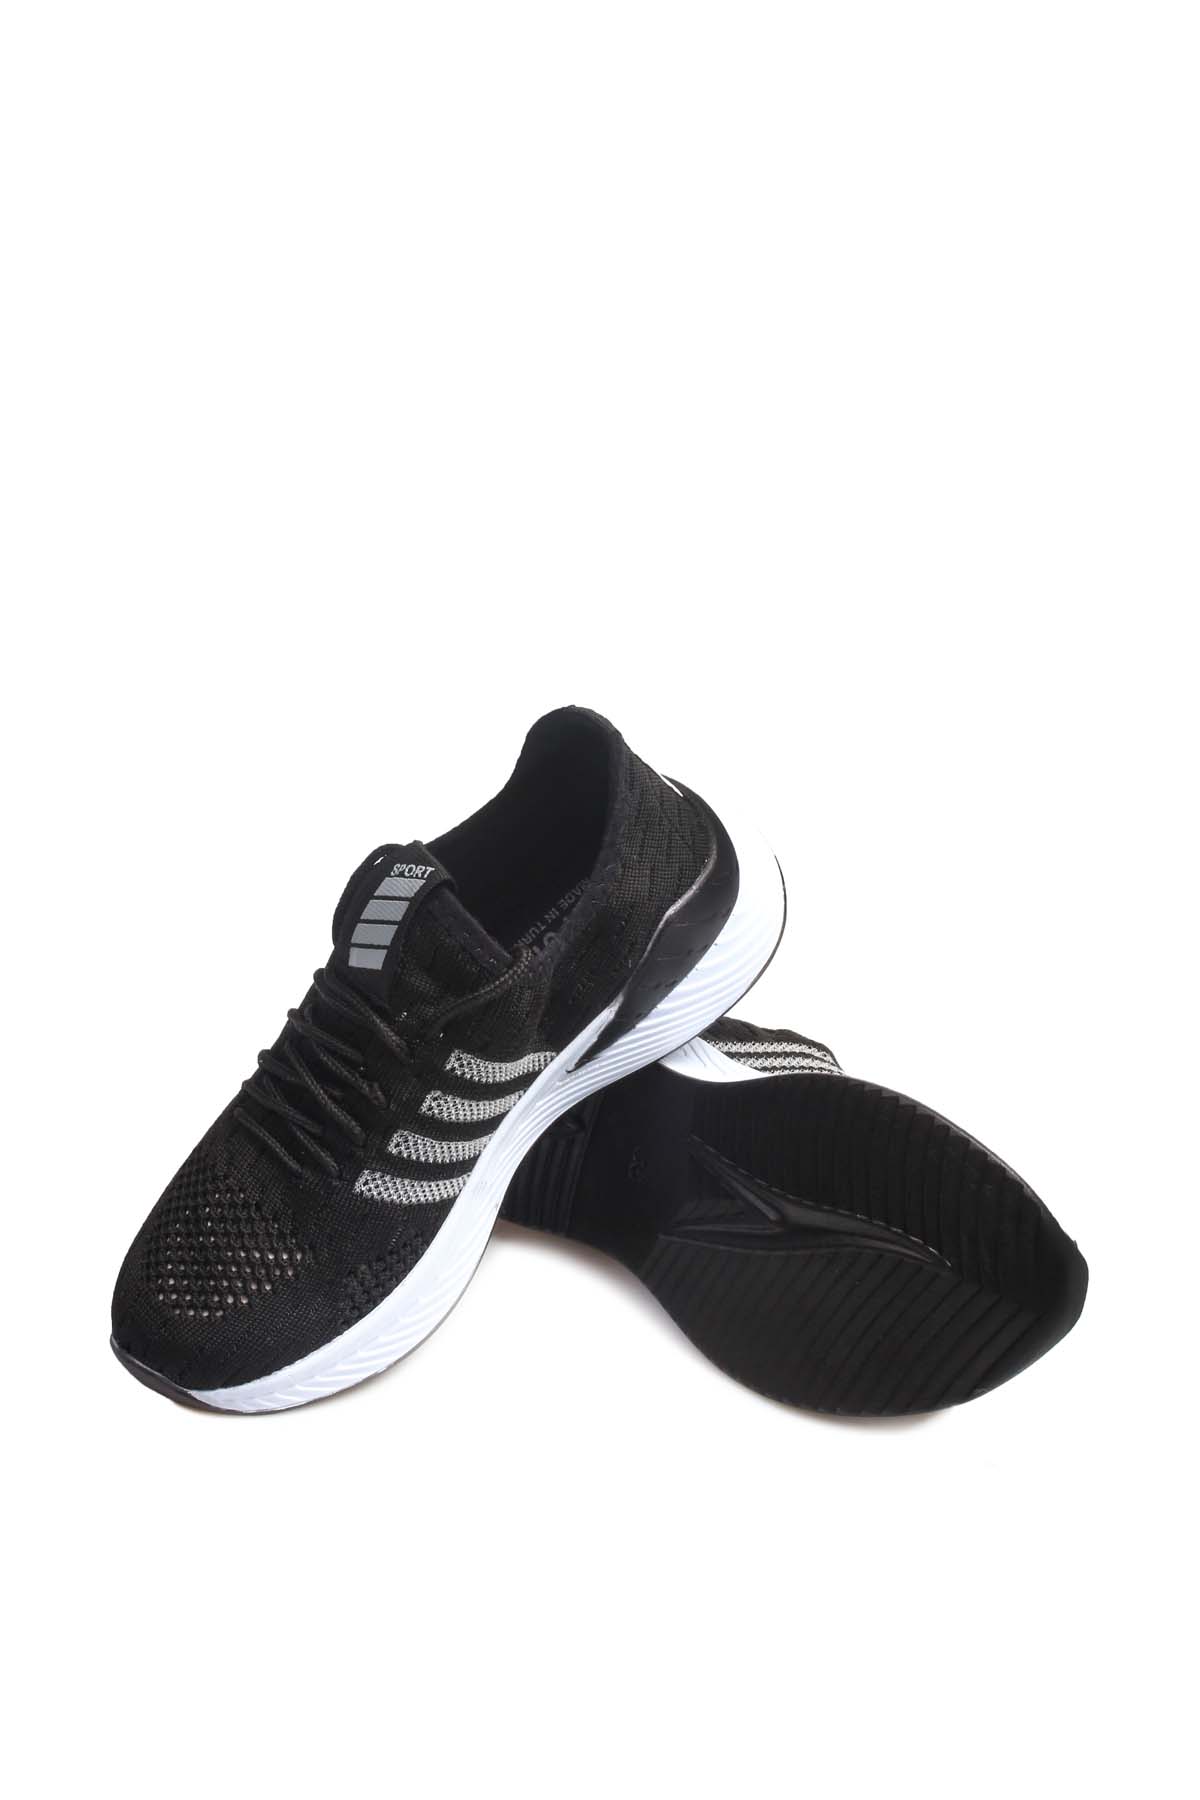 Fast Step Kadın Spor Ayakkabı Pudra 925ZA038